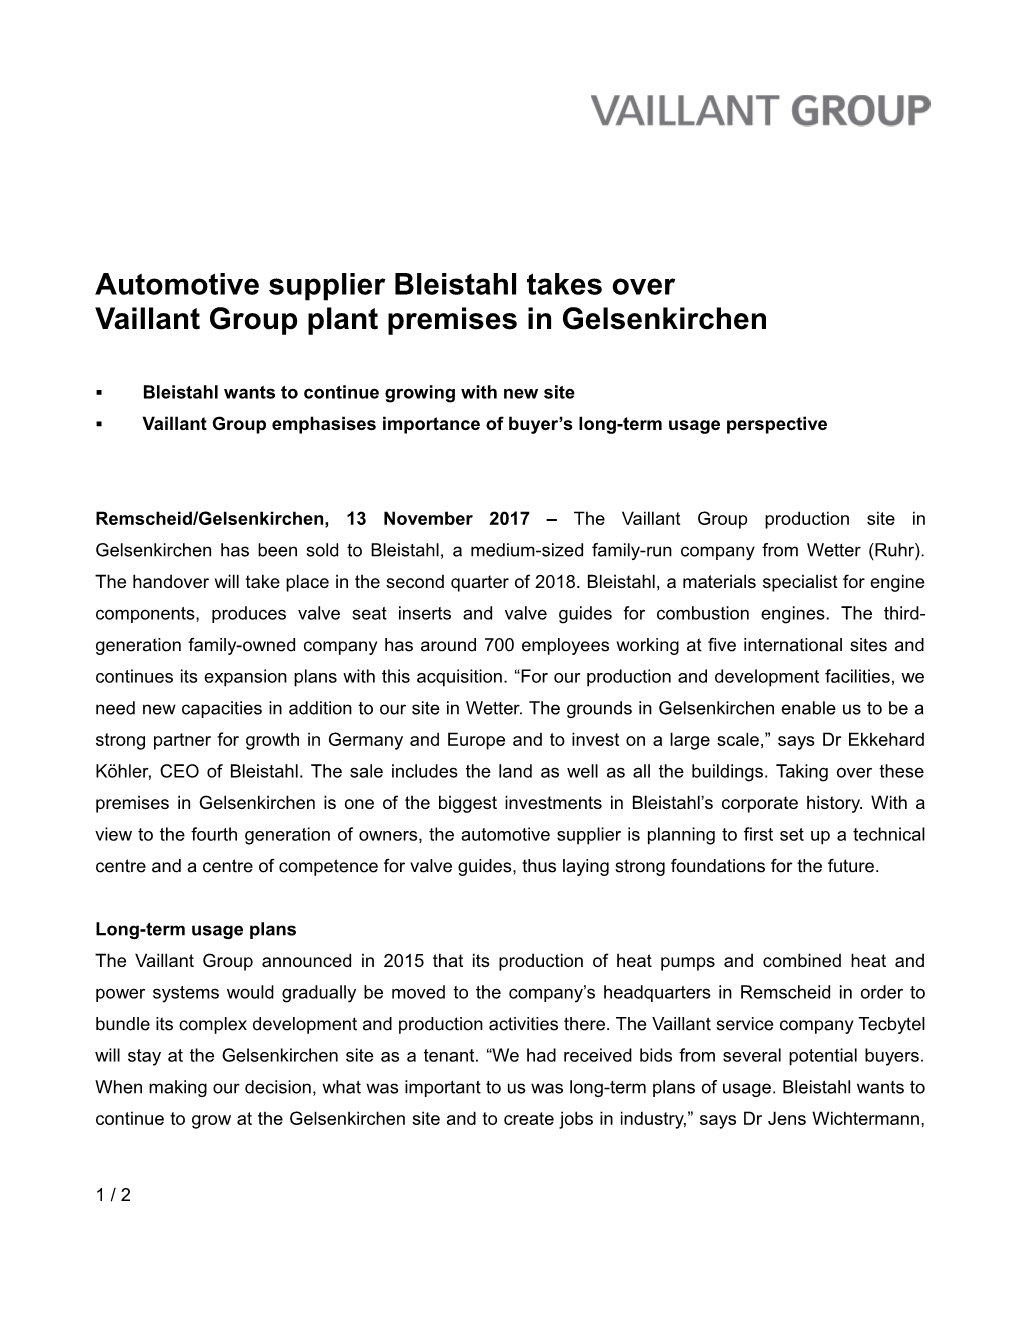 Automotive Supplier Bleistahl Takes Over Vaillant Group Plant Premises in Gelsenkirchen